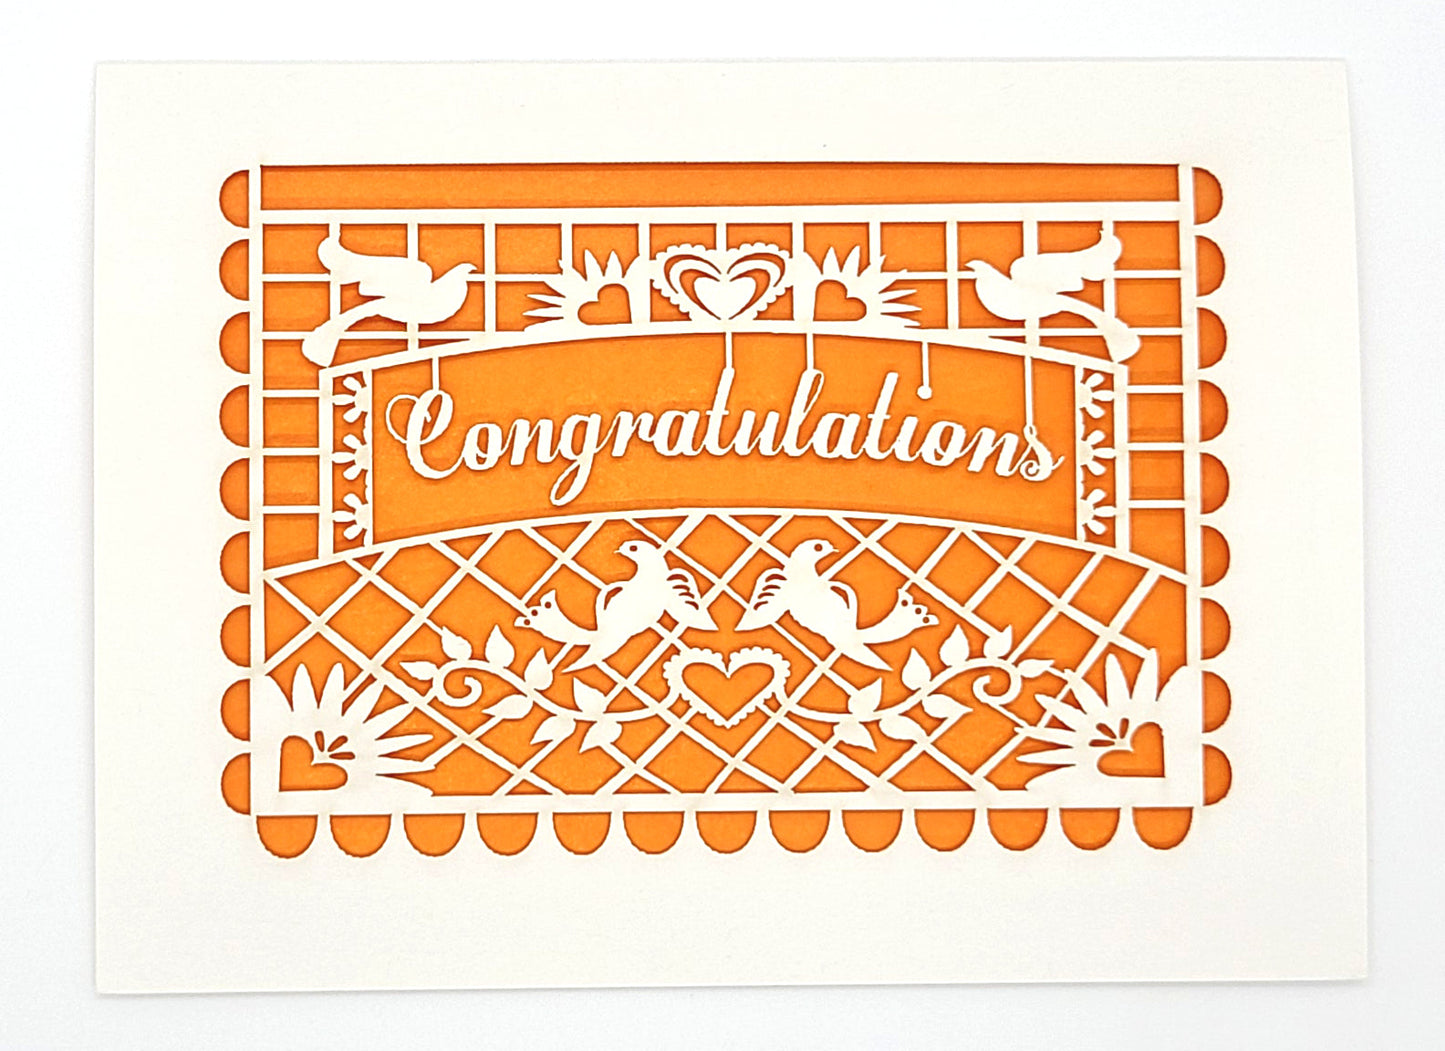 Papel Picado Greeting Card: Congratulations